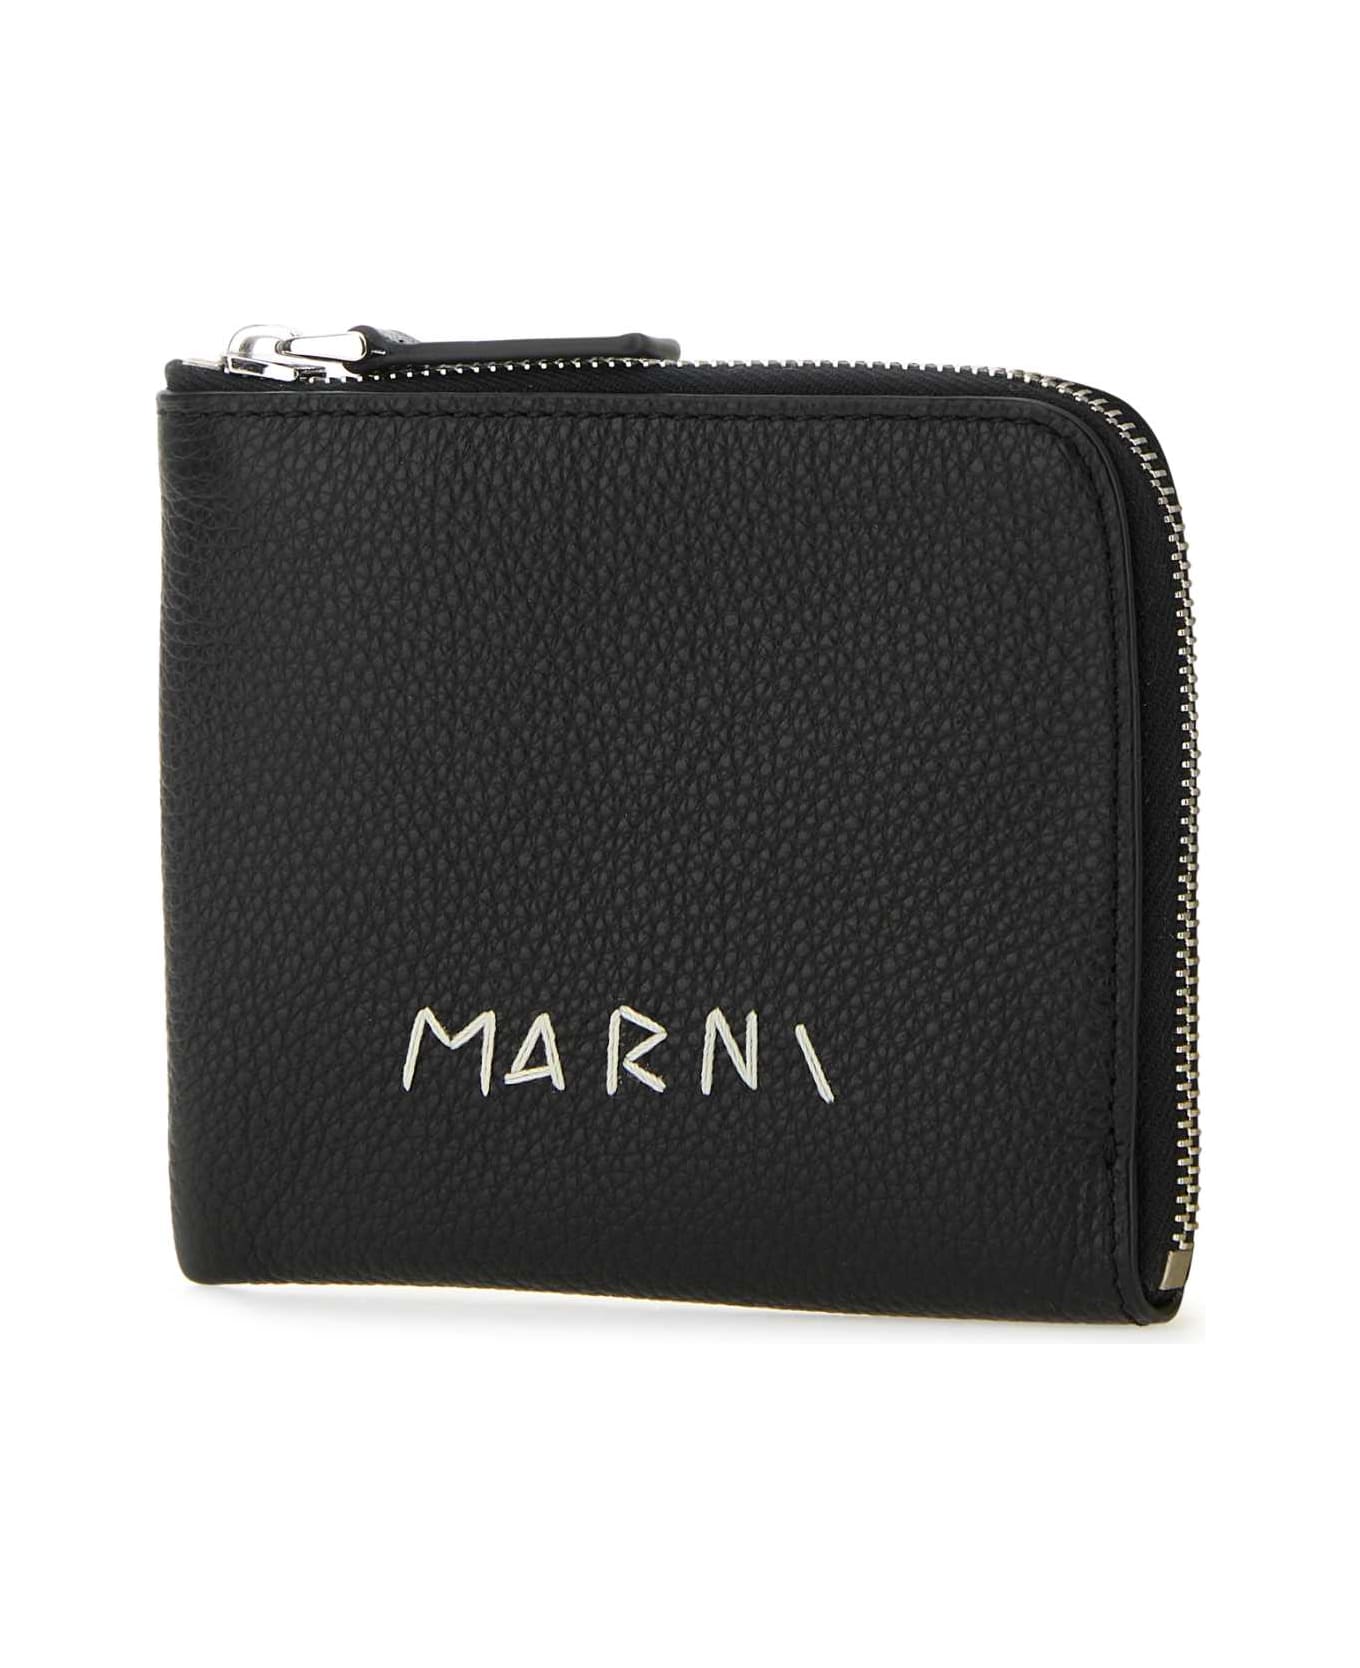 Marni Black Leather Wallet - BLACK